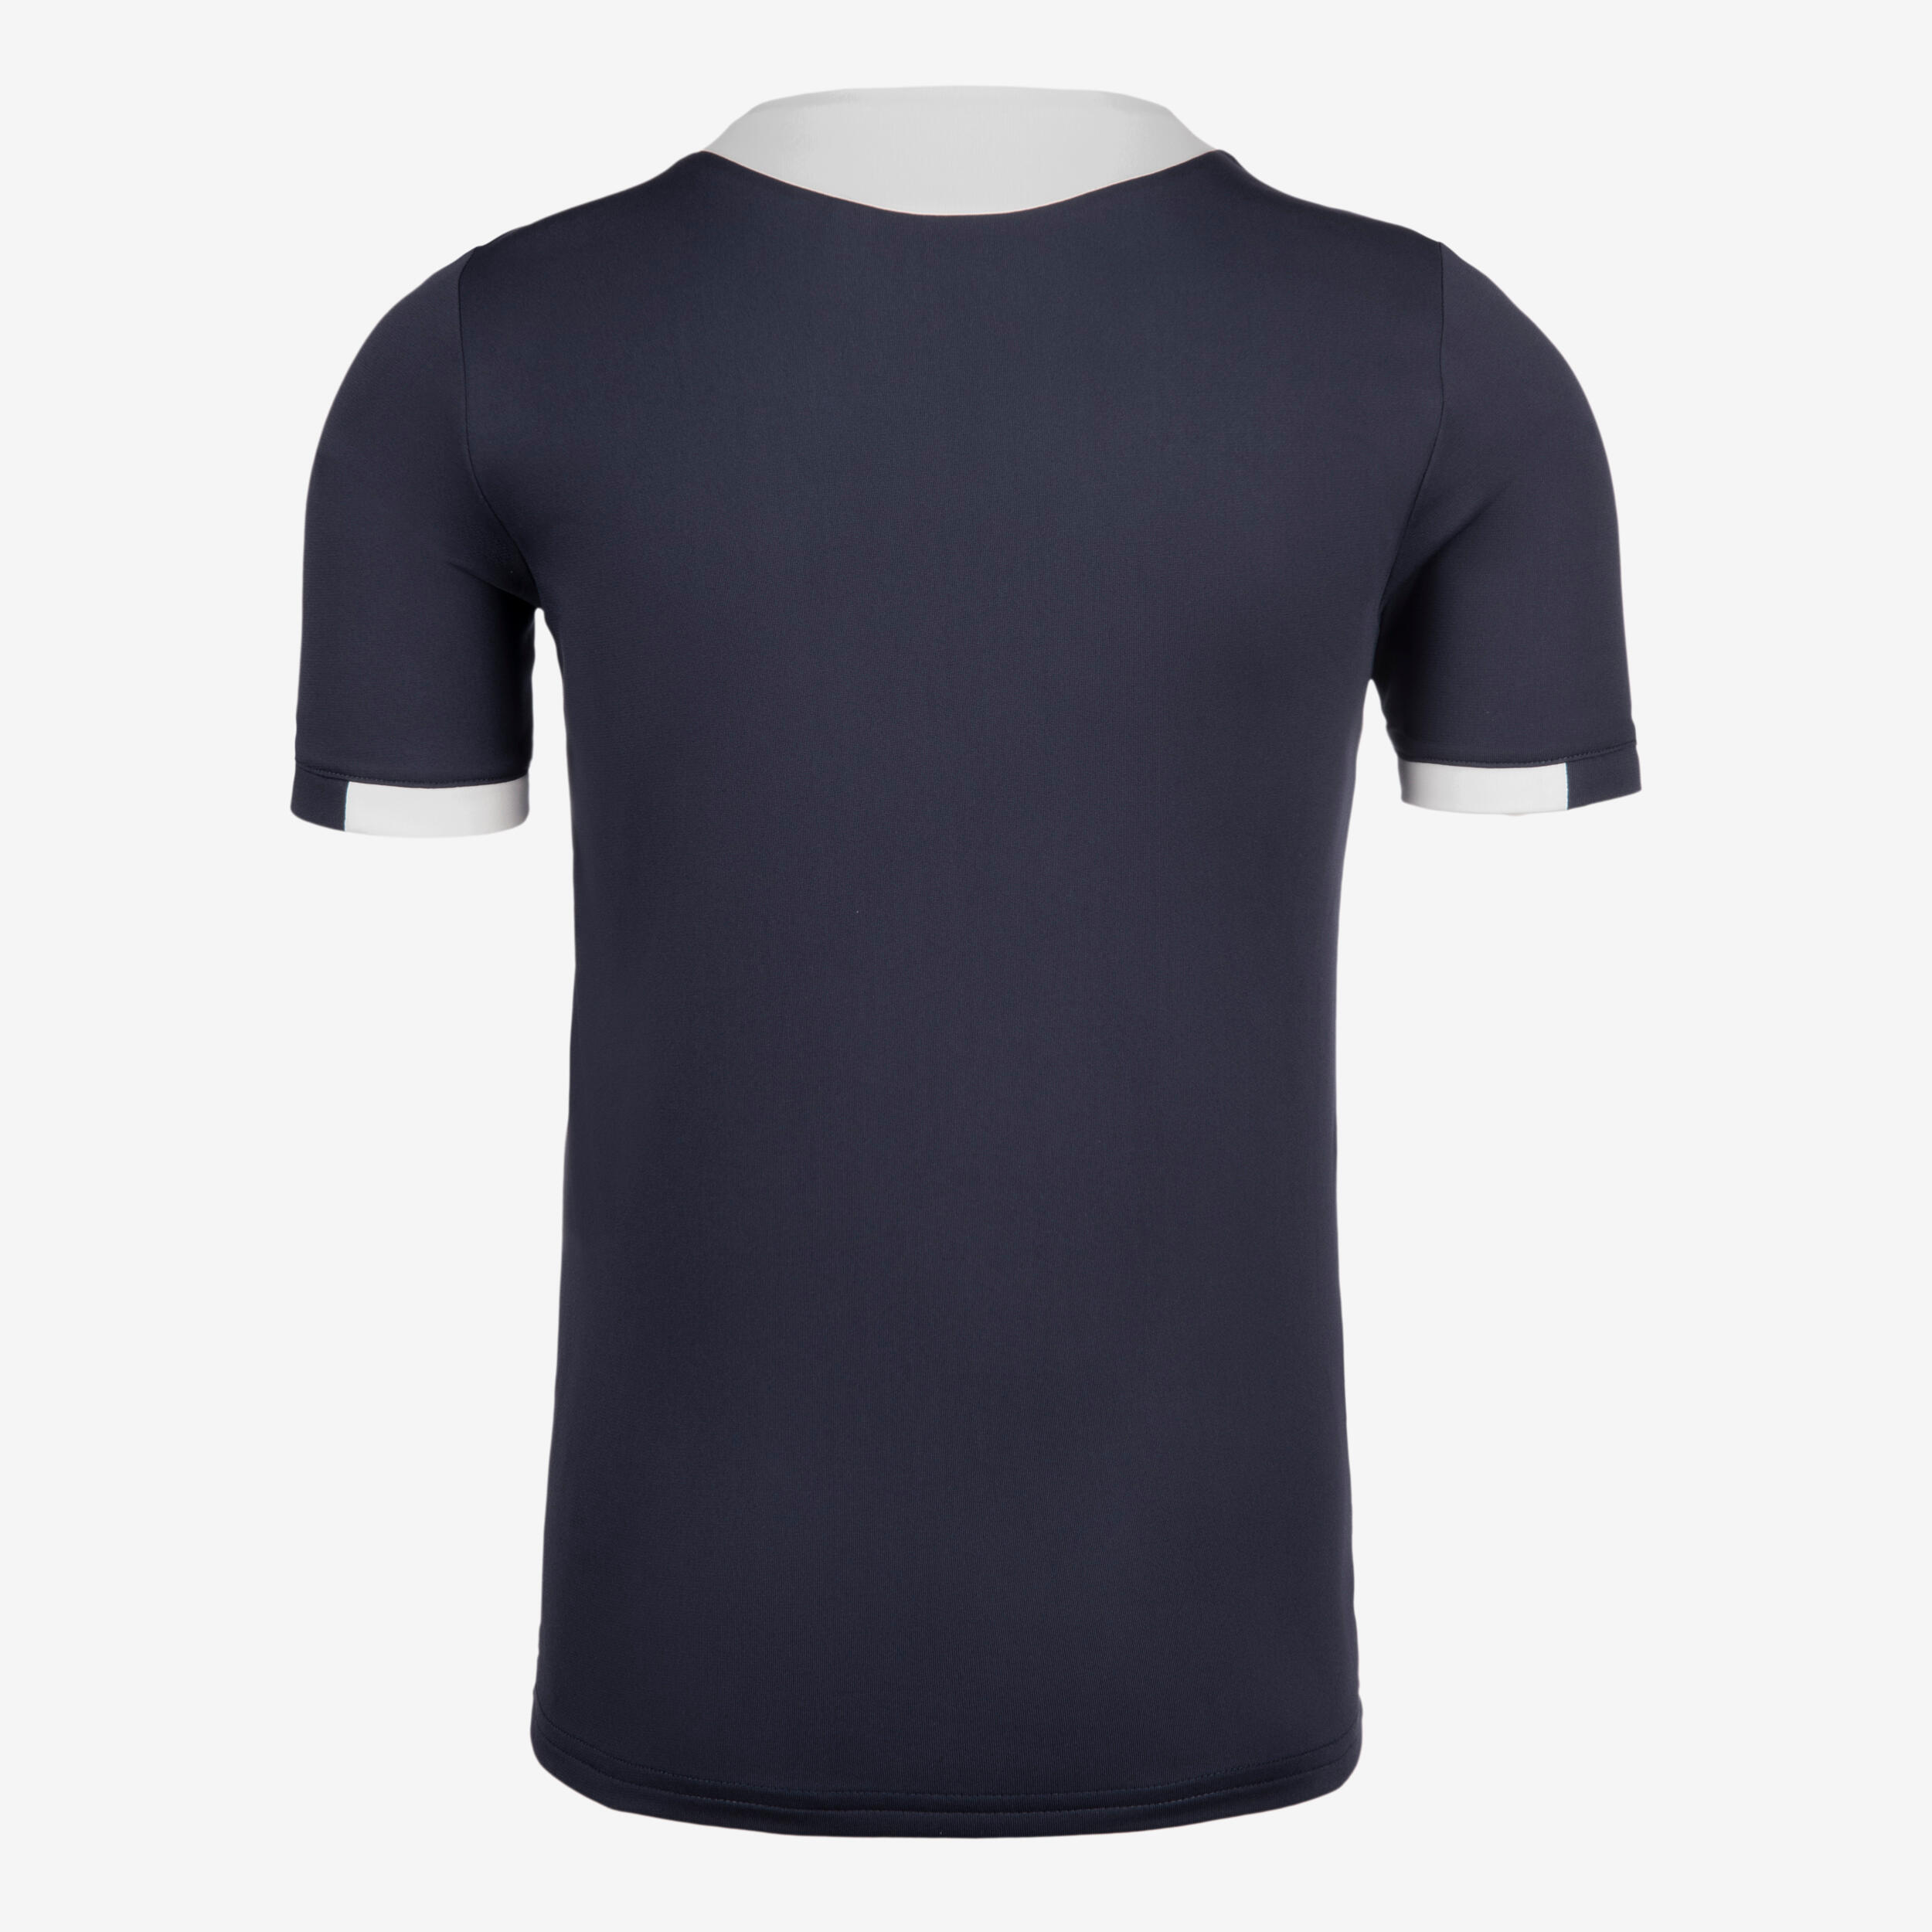 Kids' Short-Sleeved Football Shirt - Grey/Navy 6/6